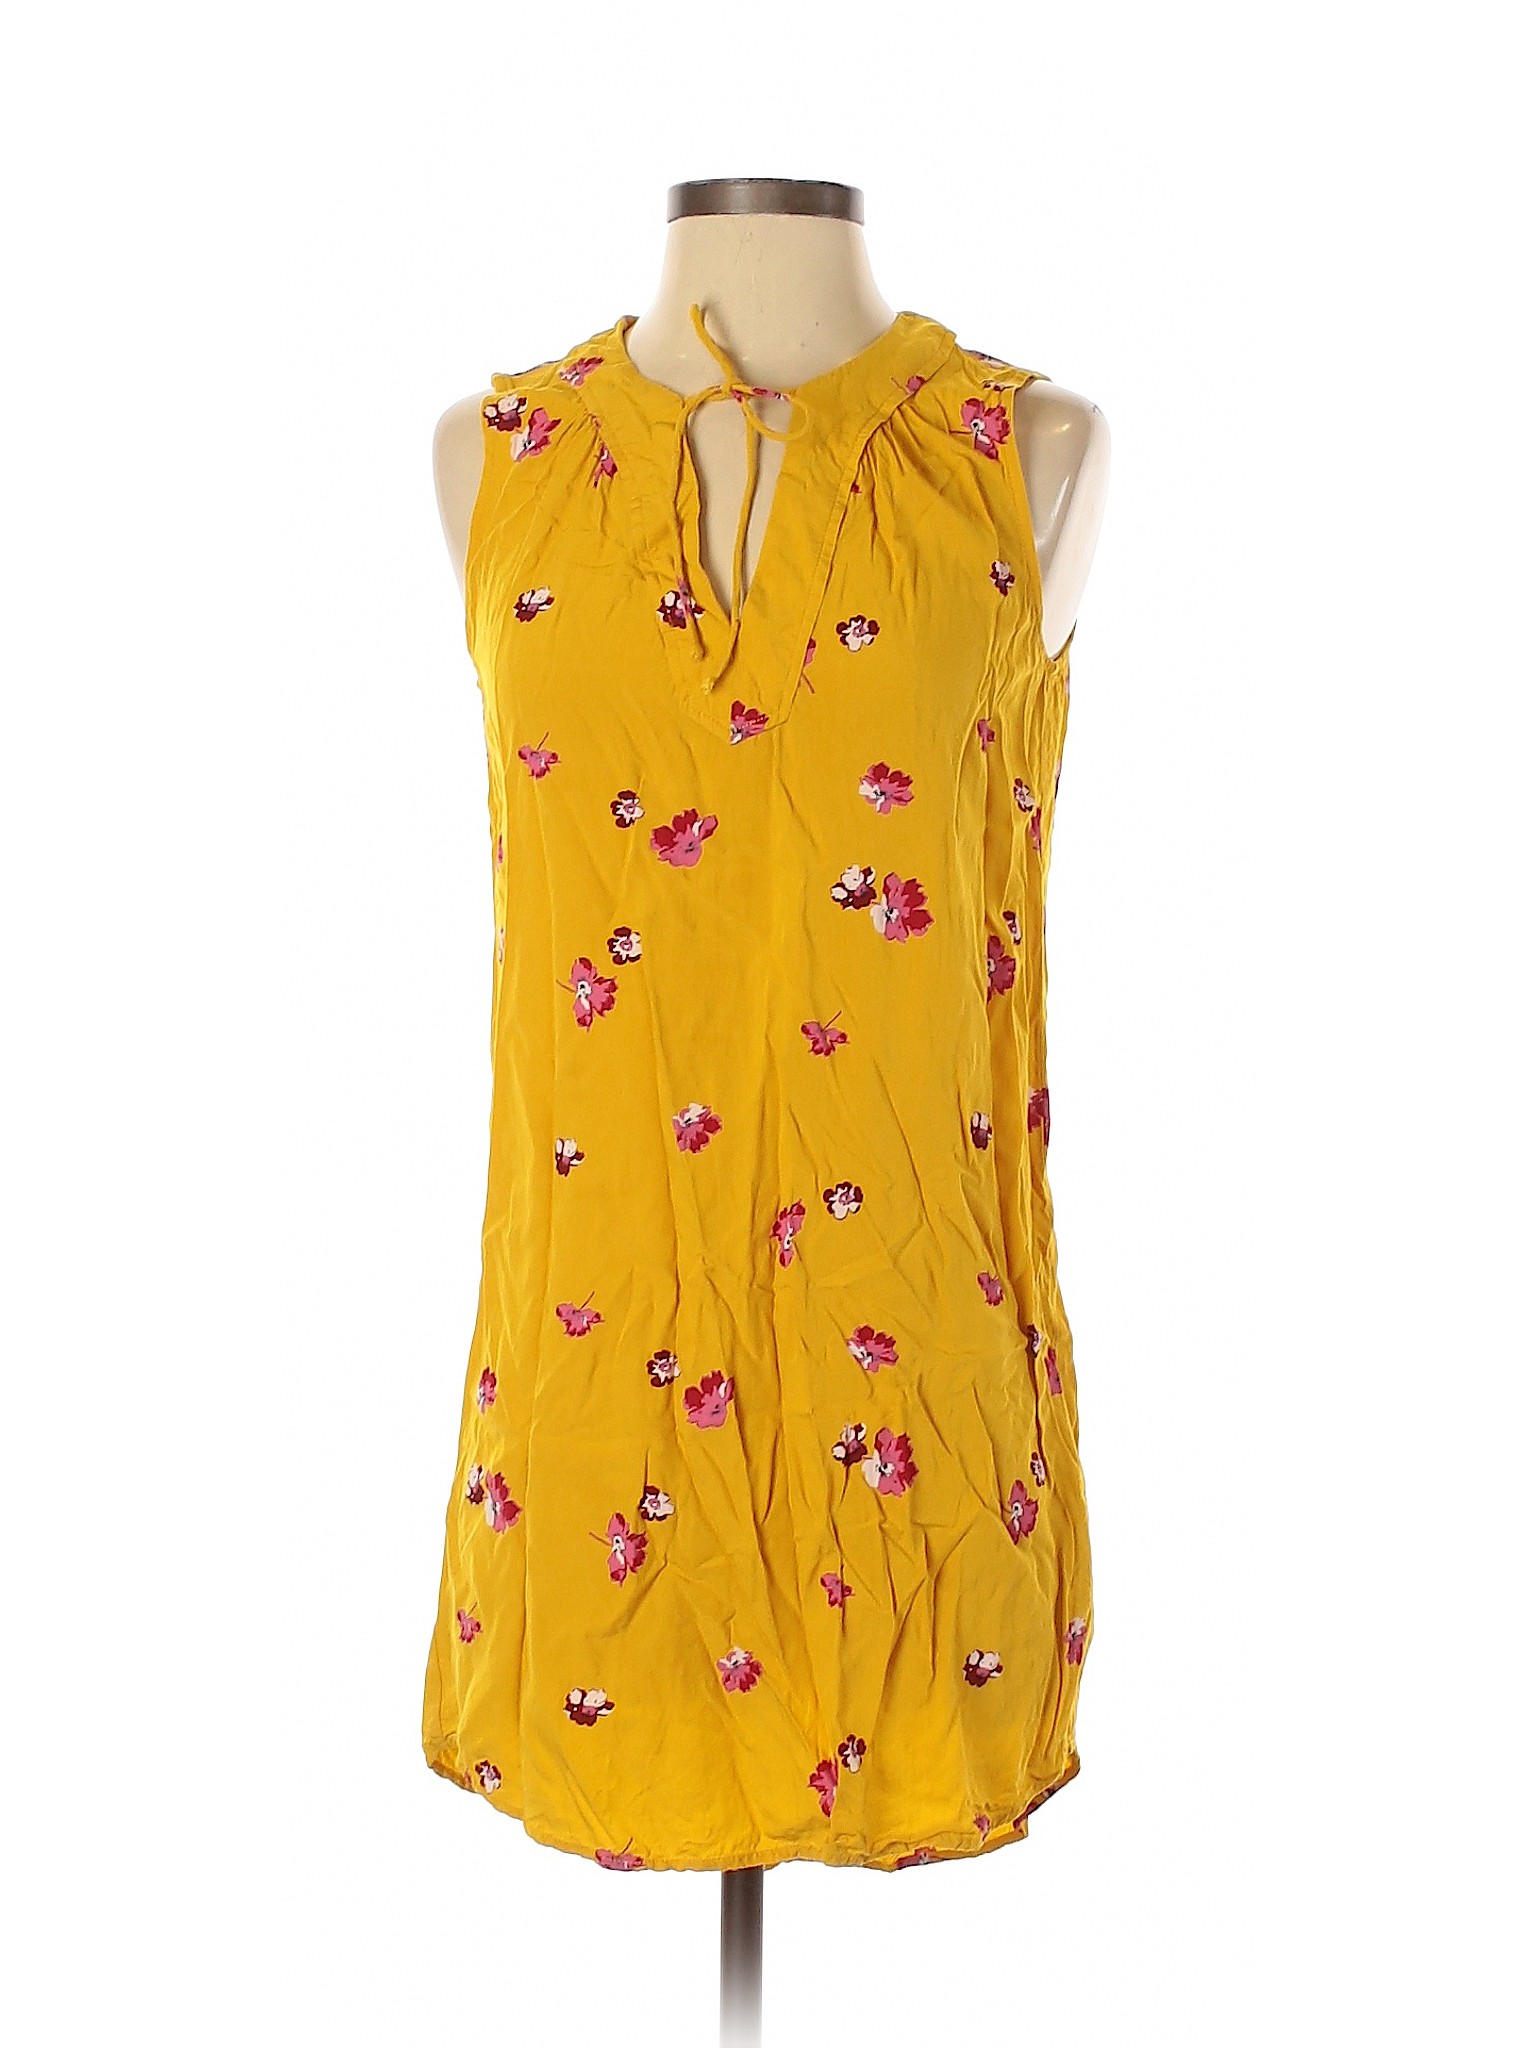 Old Navy Women Yellow Casual Dress XS | eBay